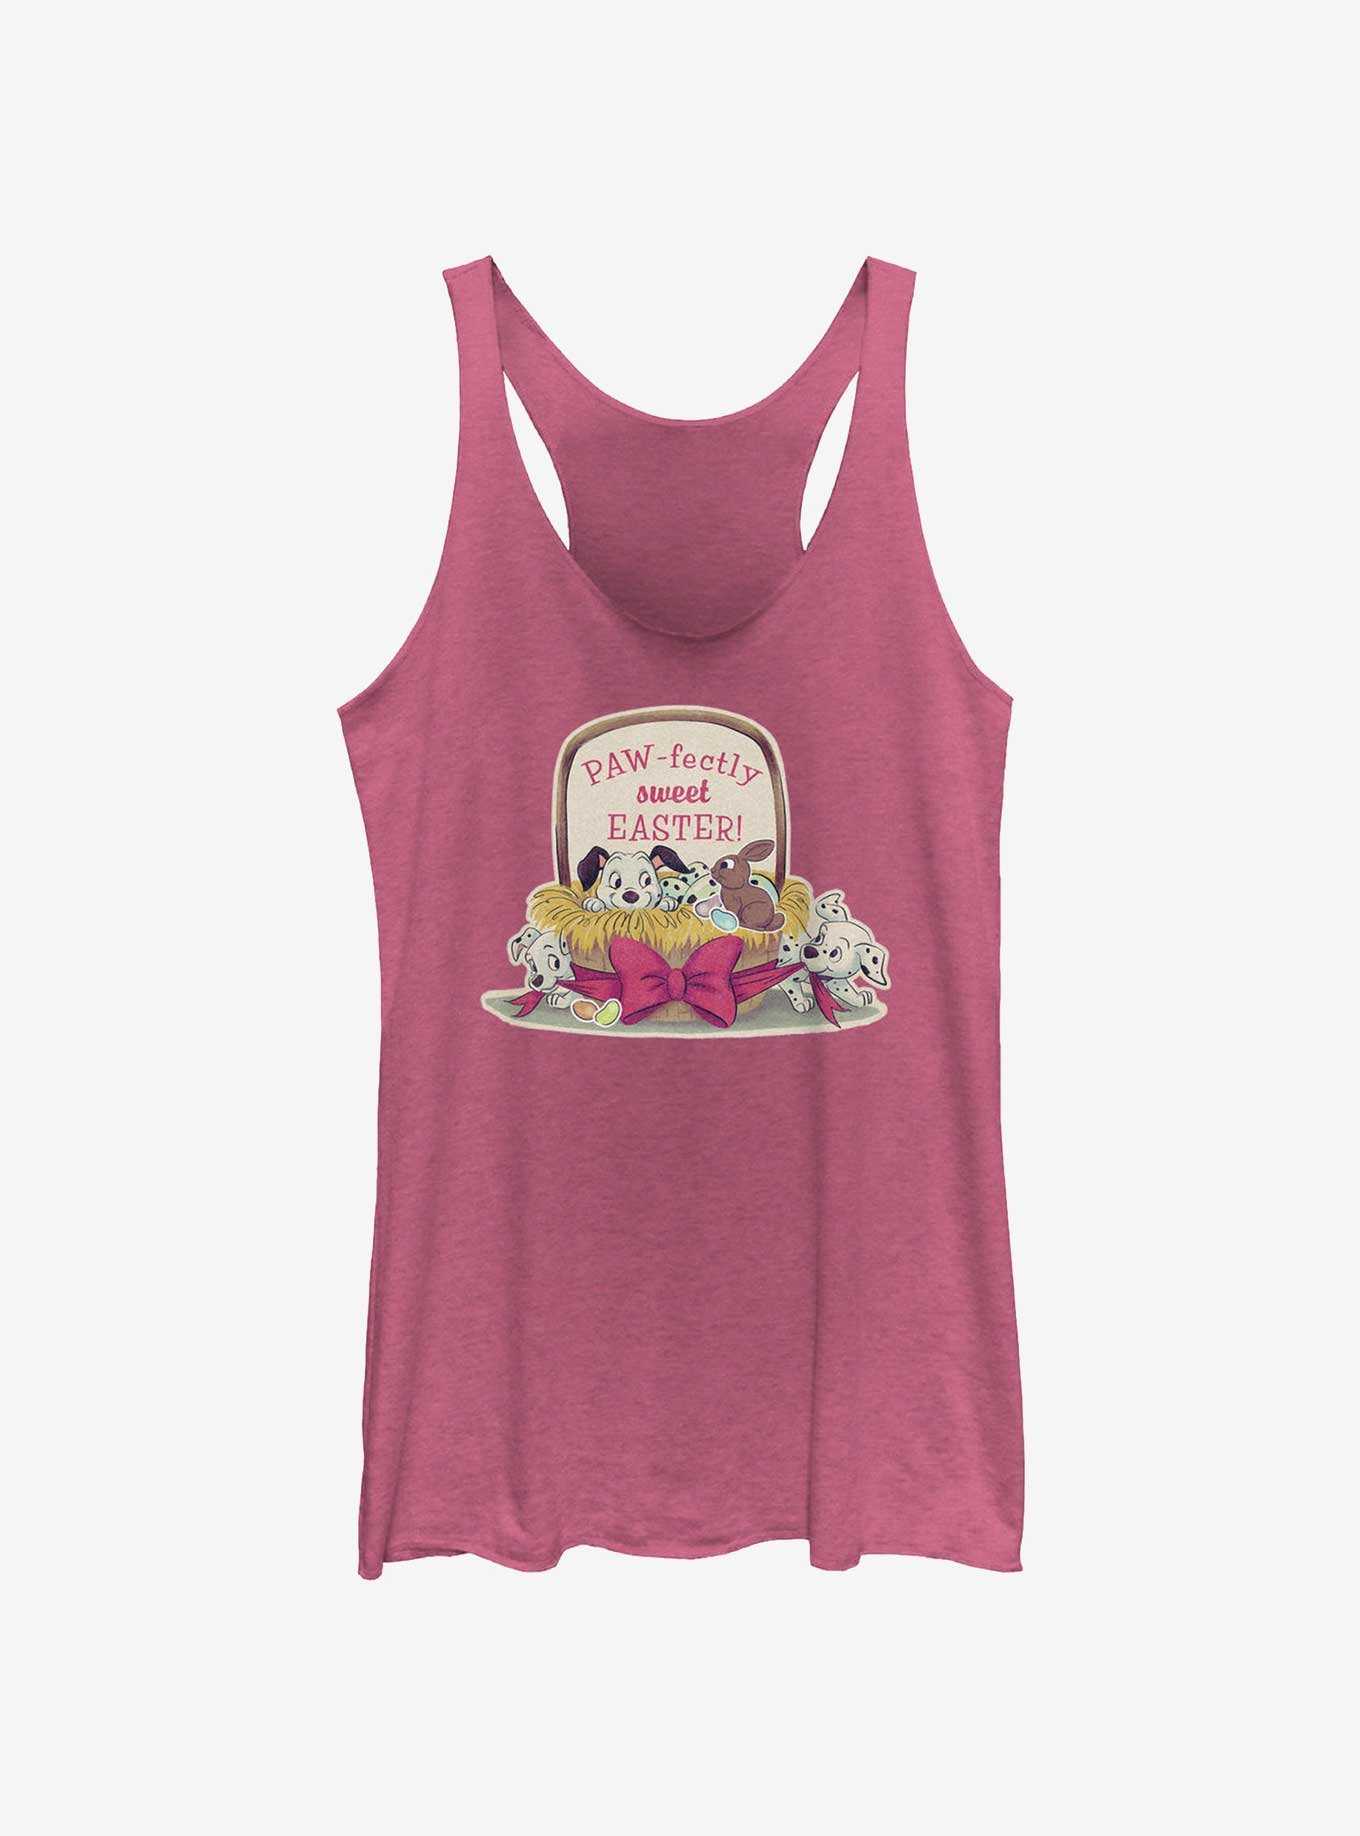 Disney 101 Dalmatians Paw-Fectly Sweet Easter Girls Tank, , hi-res